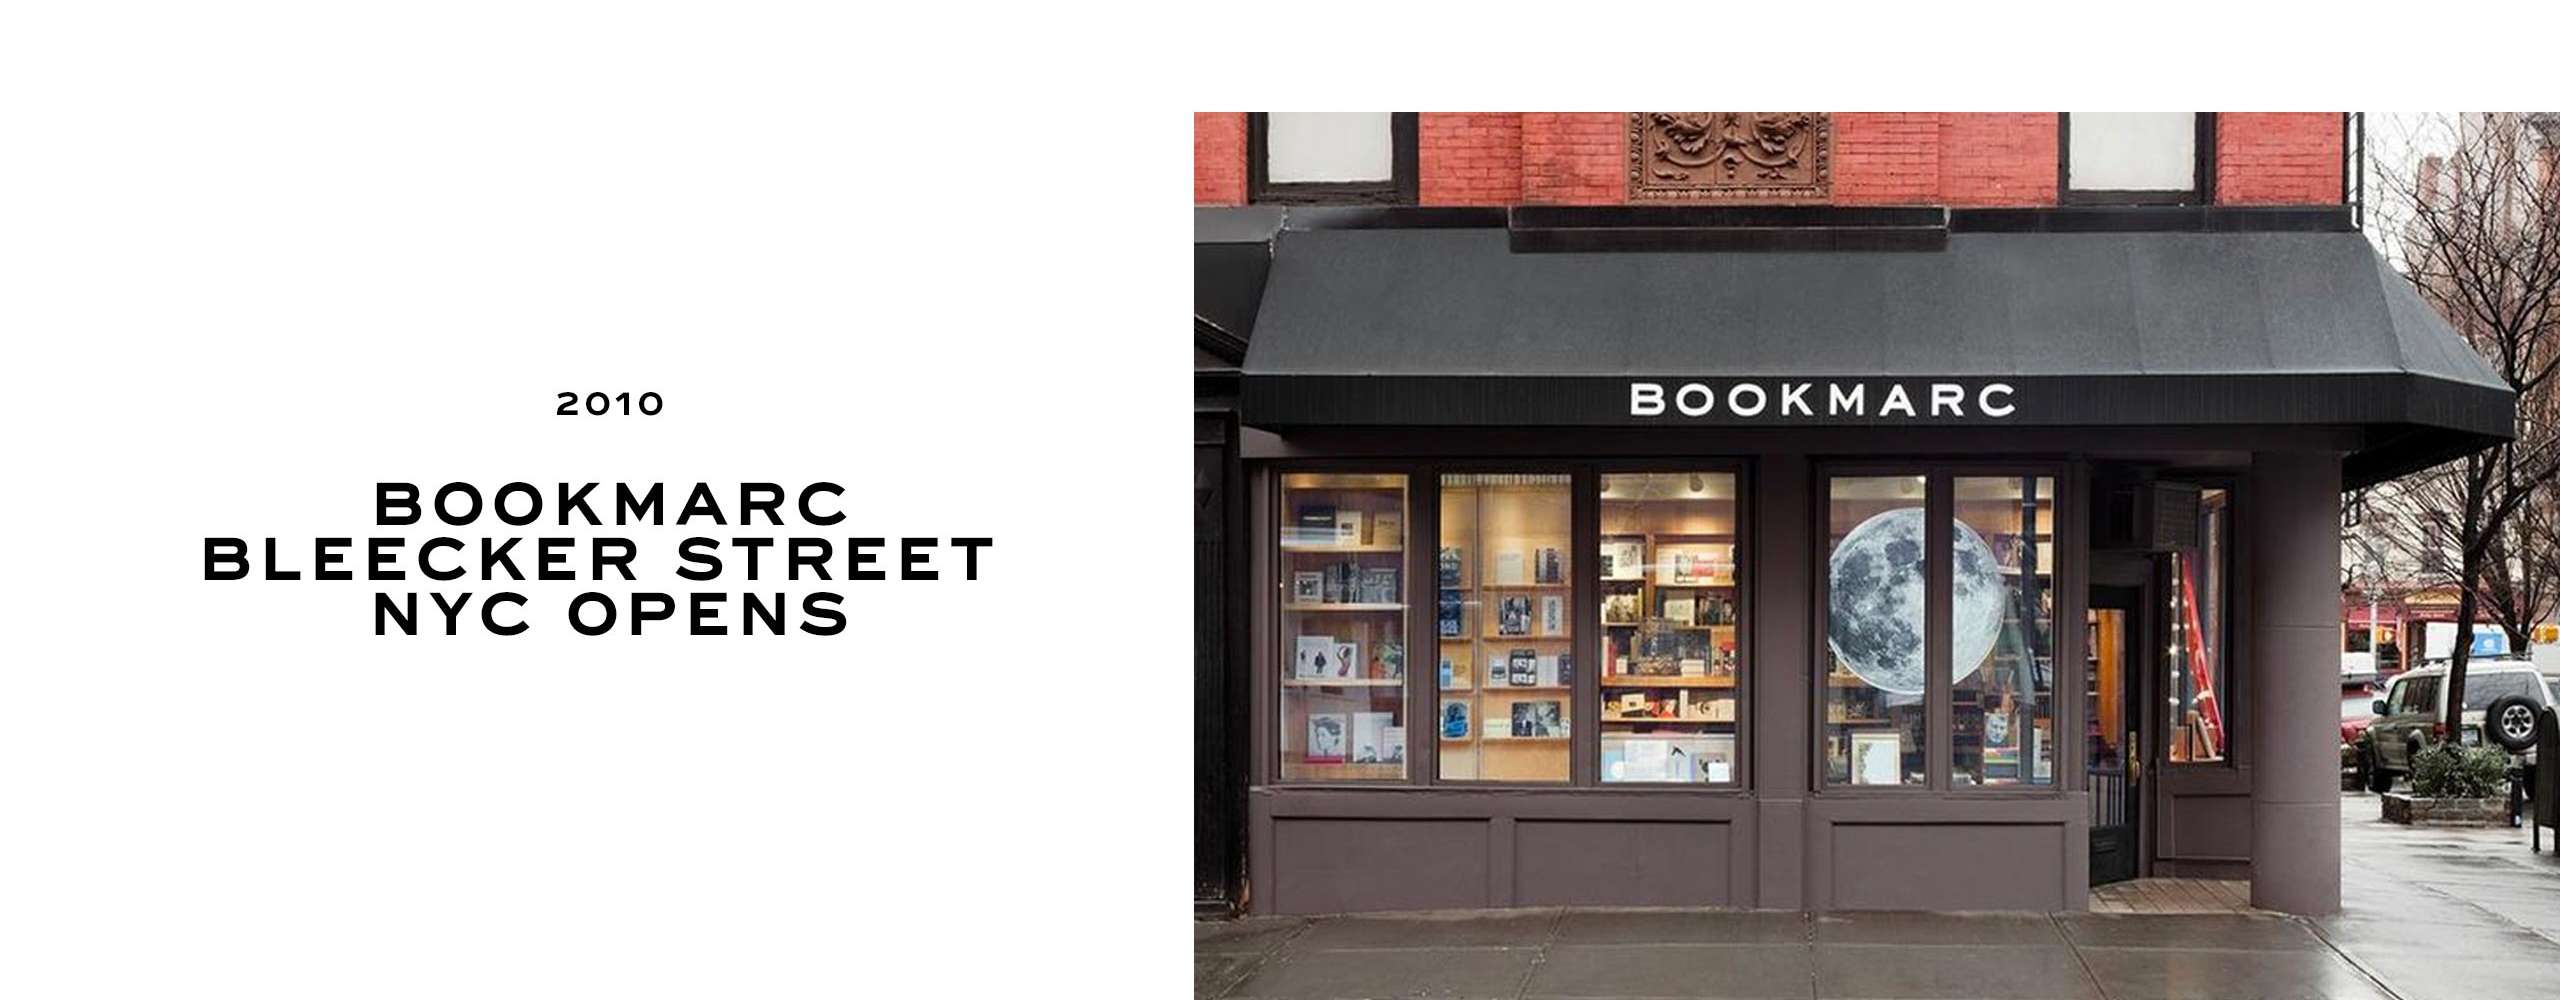 2010: Bookmarc Bleecker Street NYC opens.